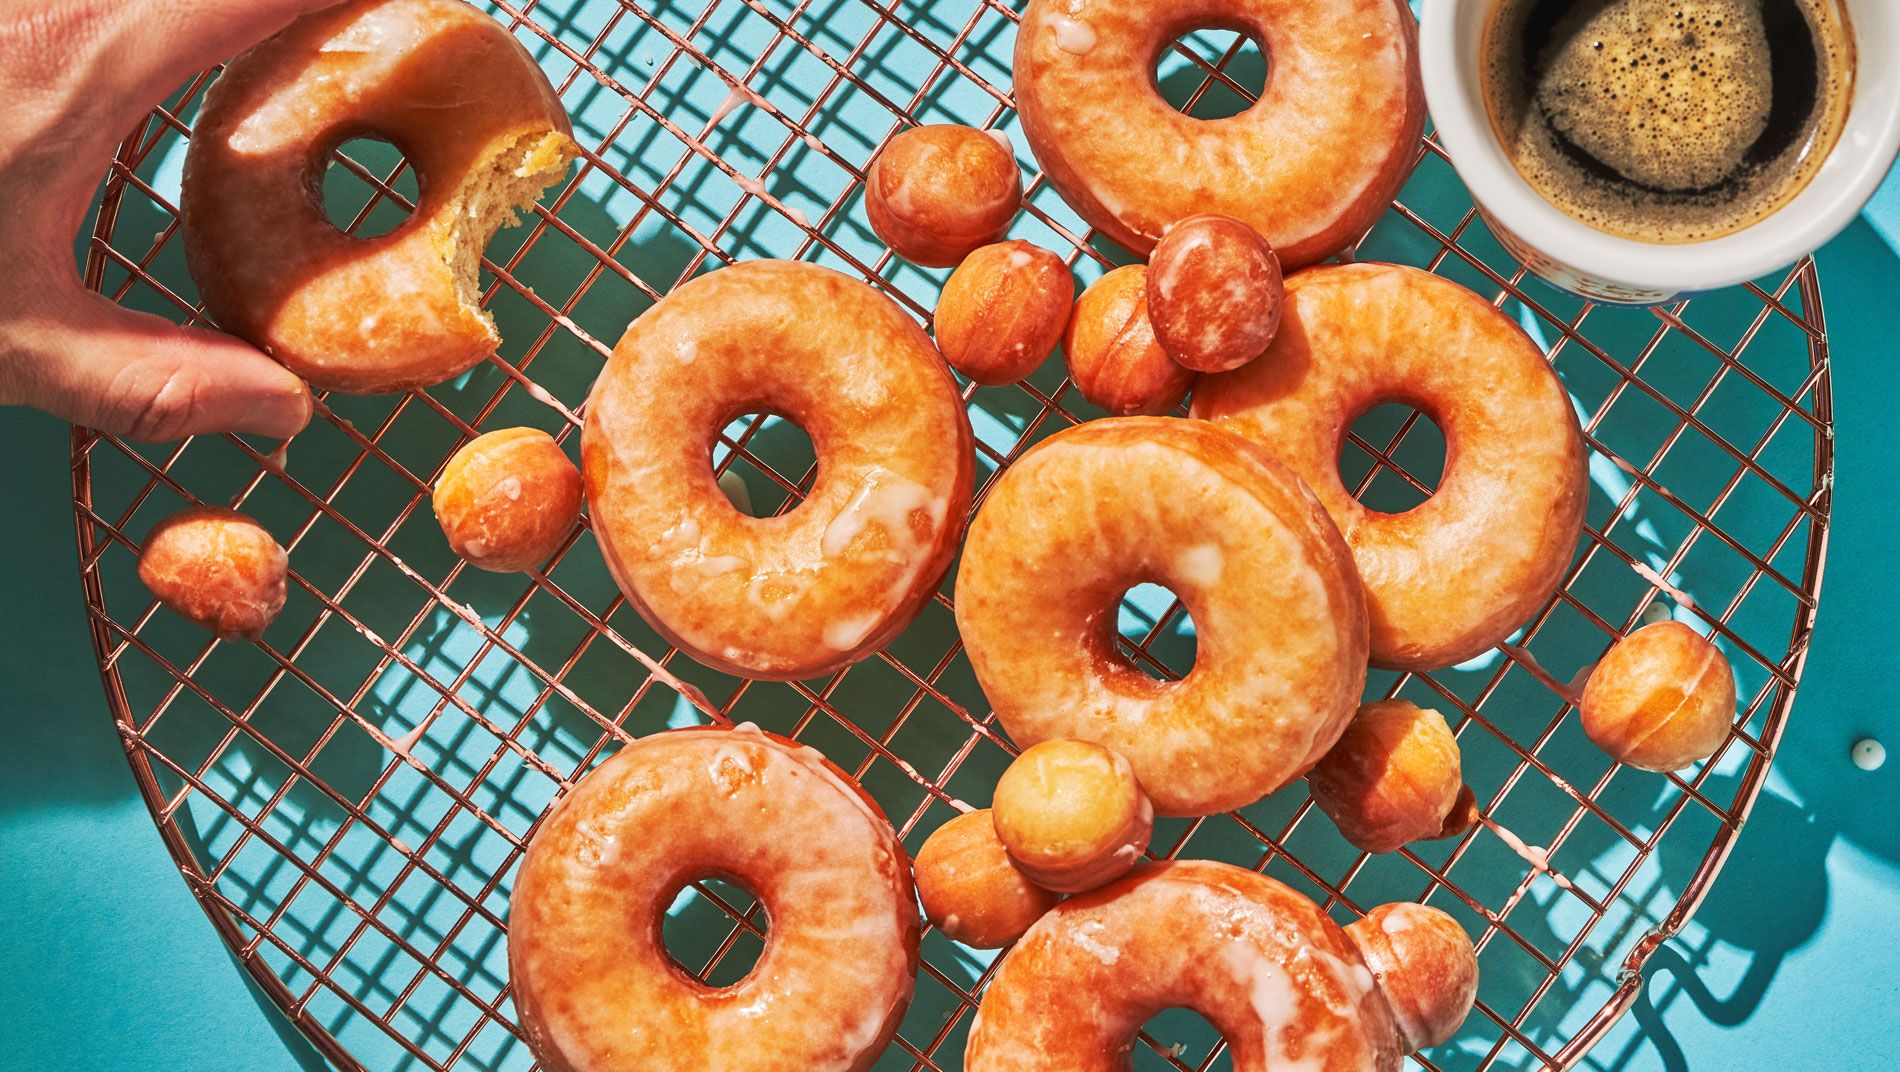 How to Make Donuts at Home - Homemade Doughnuts